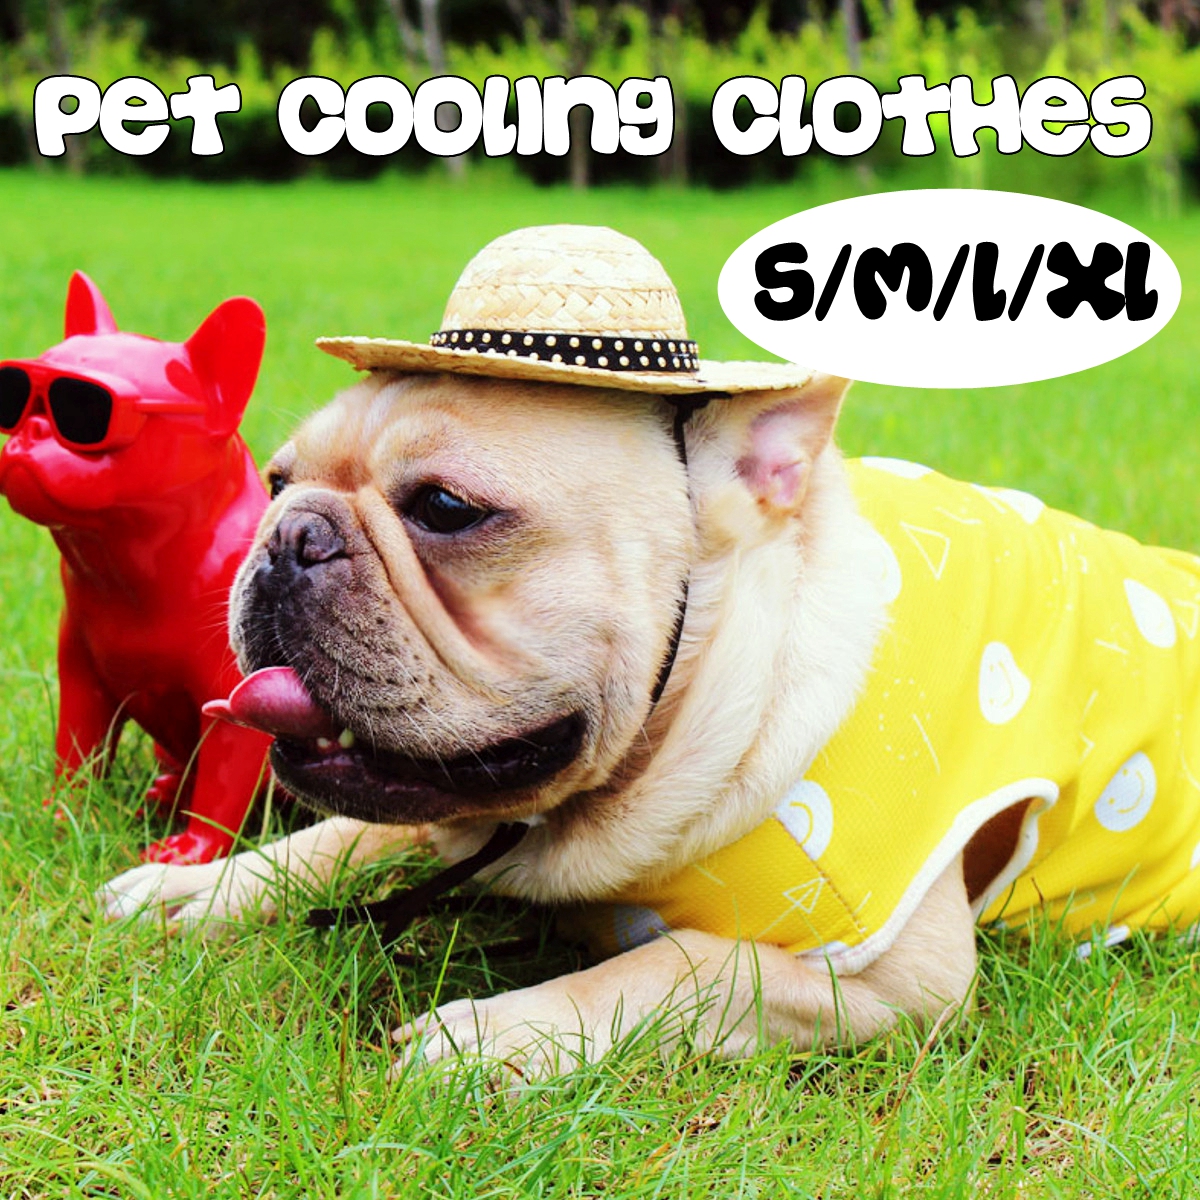 Pet-T-shirt-Dog-Vest-Coat-Breathable-Sunscreen-Cooling-Clothing-Jacket-Clothes-1341264-1